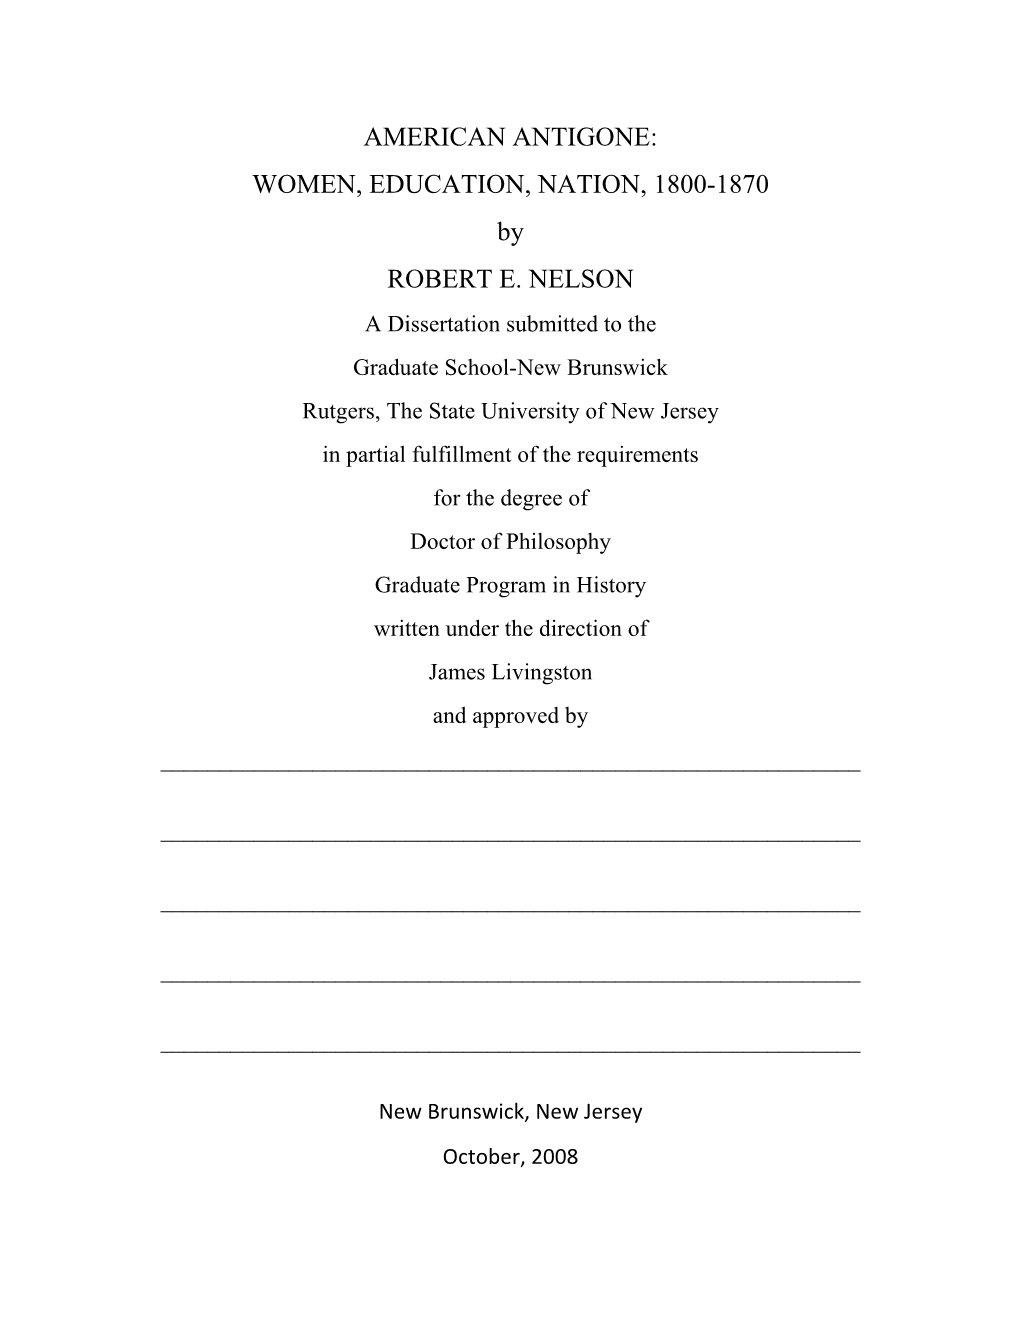 AMERICAN ANTIGONE: WOMEN, EDUCATION, NATION, 1800-1870 by ROBERT E